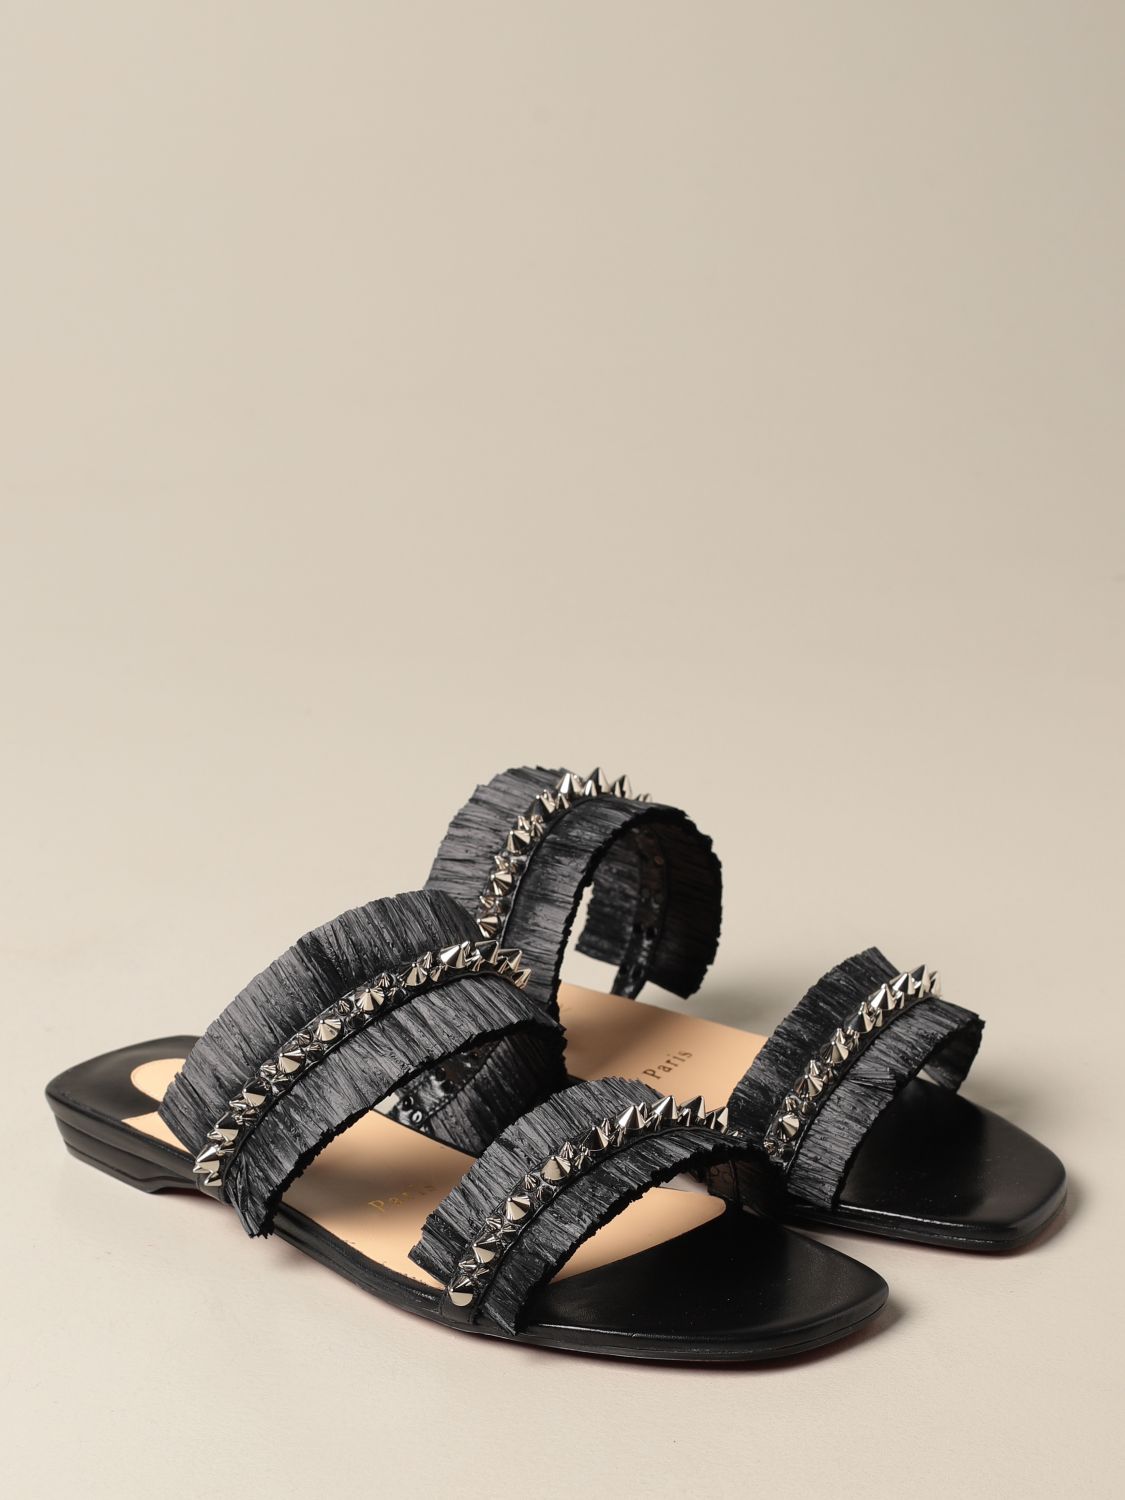 CHRISTIAN LOUBOUTIN: Marivodu sandals in raffia with studs | Flat